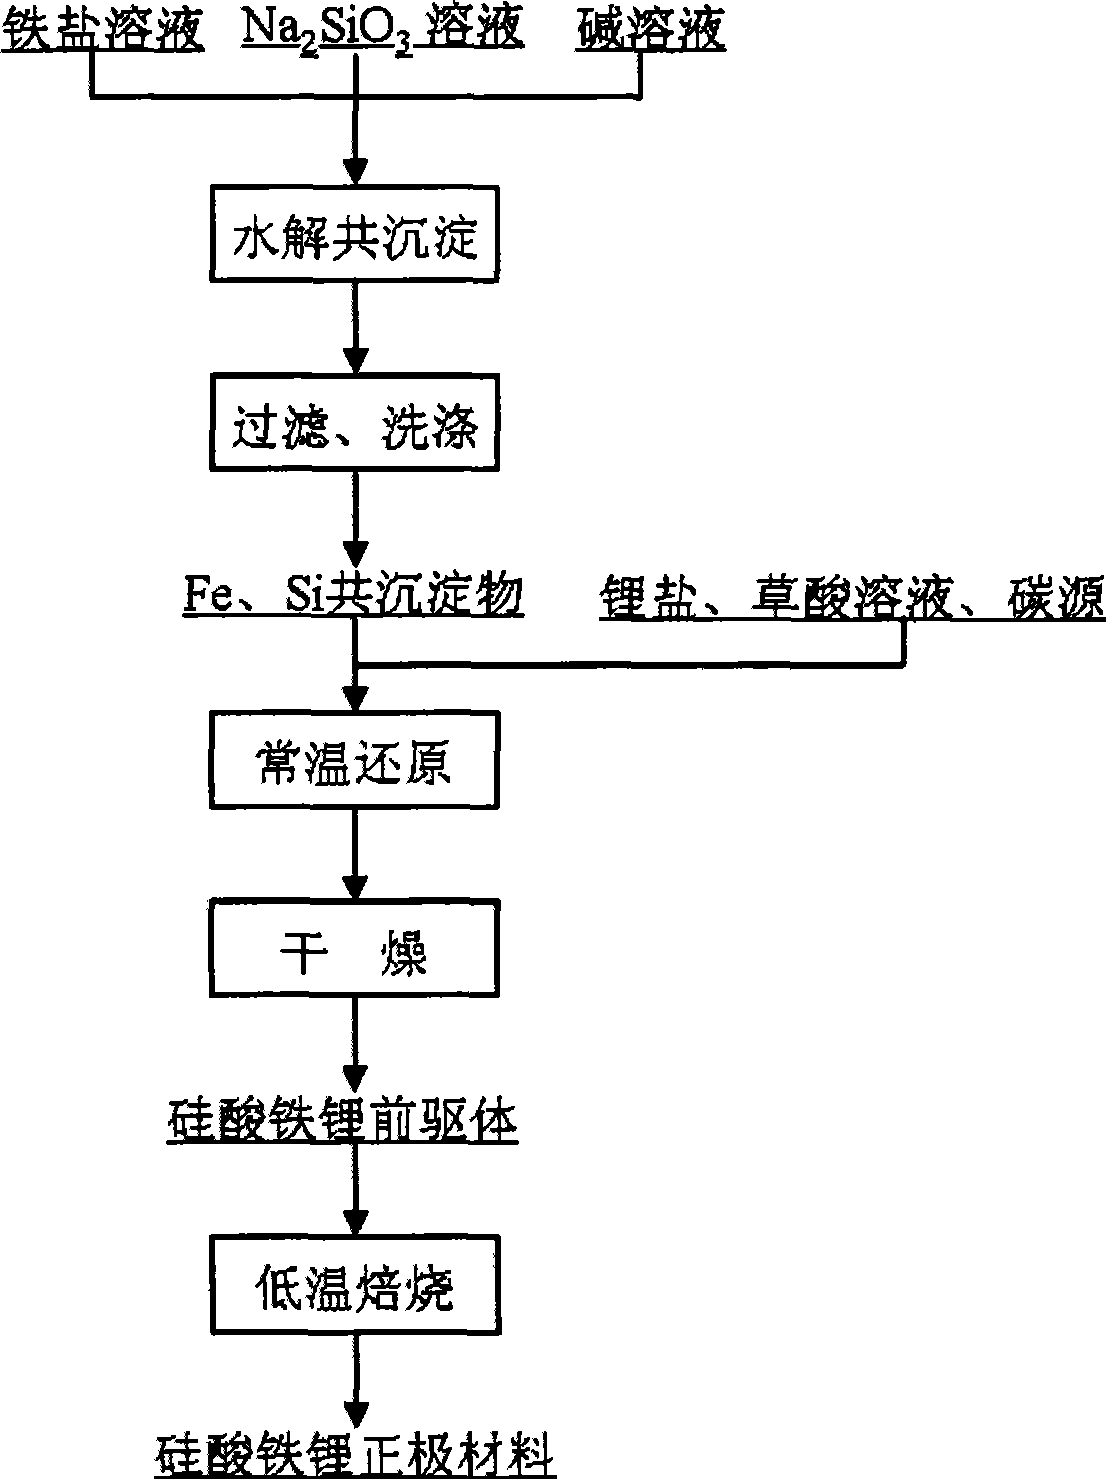 Production method of lithium ferric metasilicate anode material